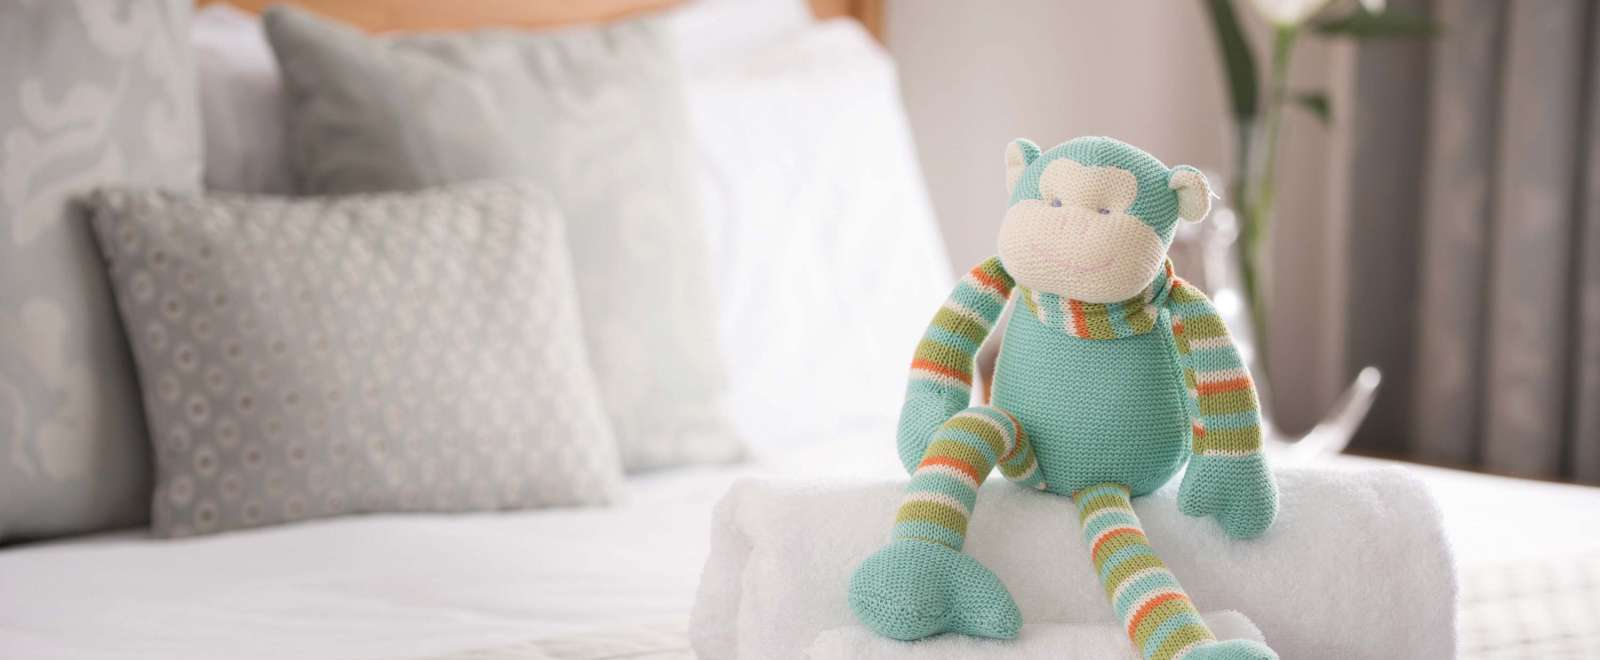 Saunton Sands Hotel Accommodation Bedroom Cuddly Monkey Childs Soft Toy on Bed